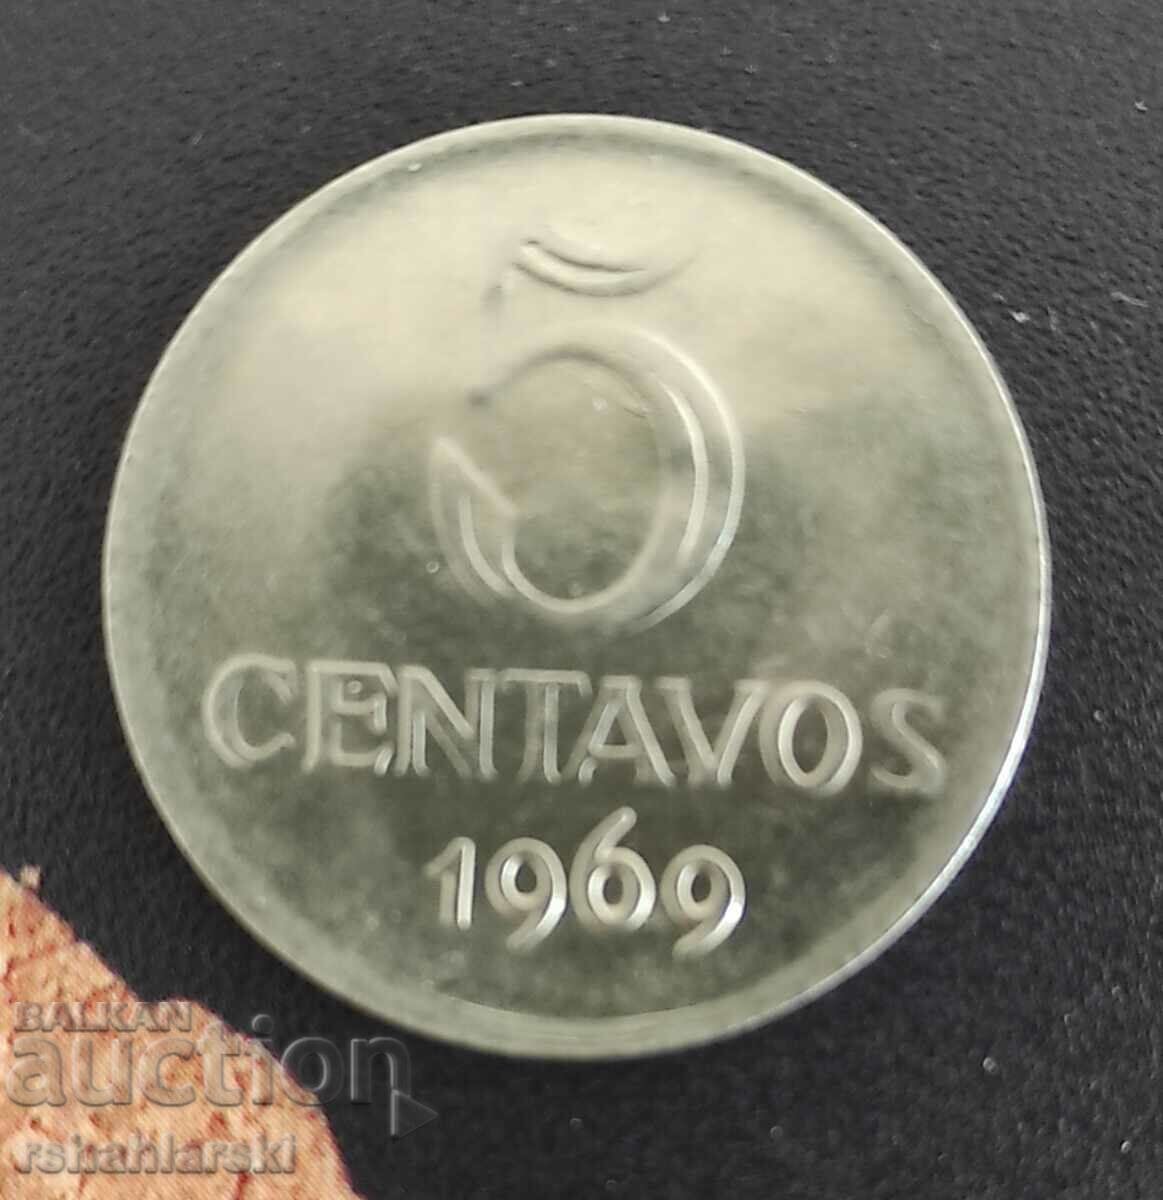 Coins Brazil 5 centavos, 1969 - 2 pcs.